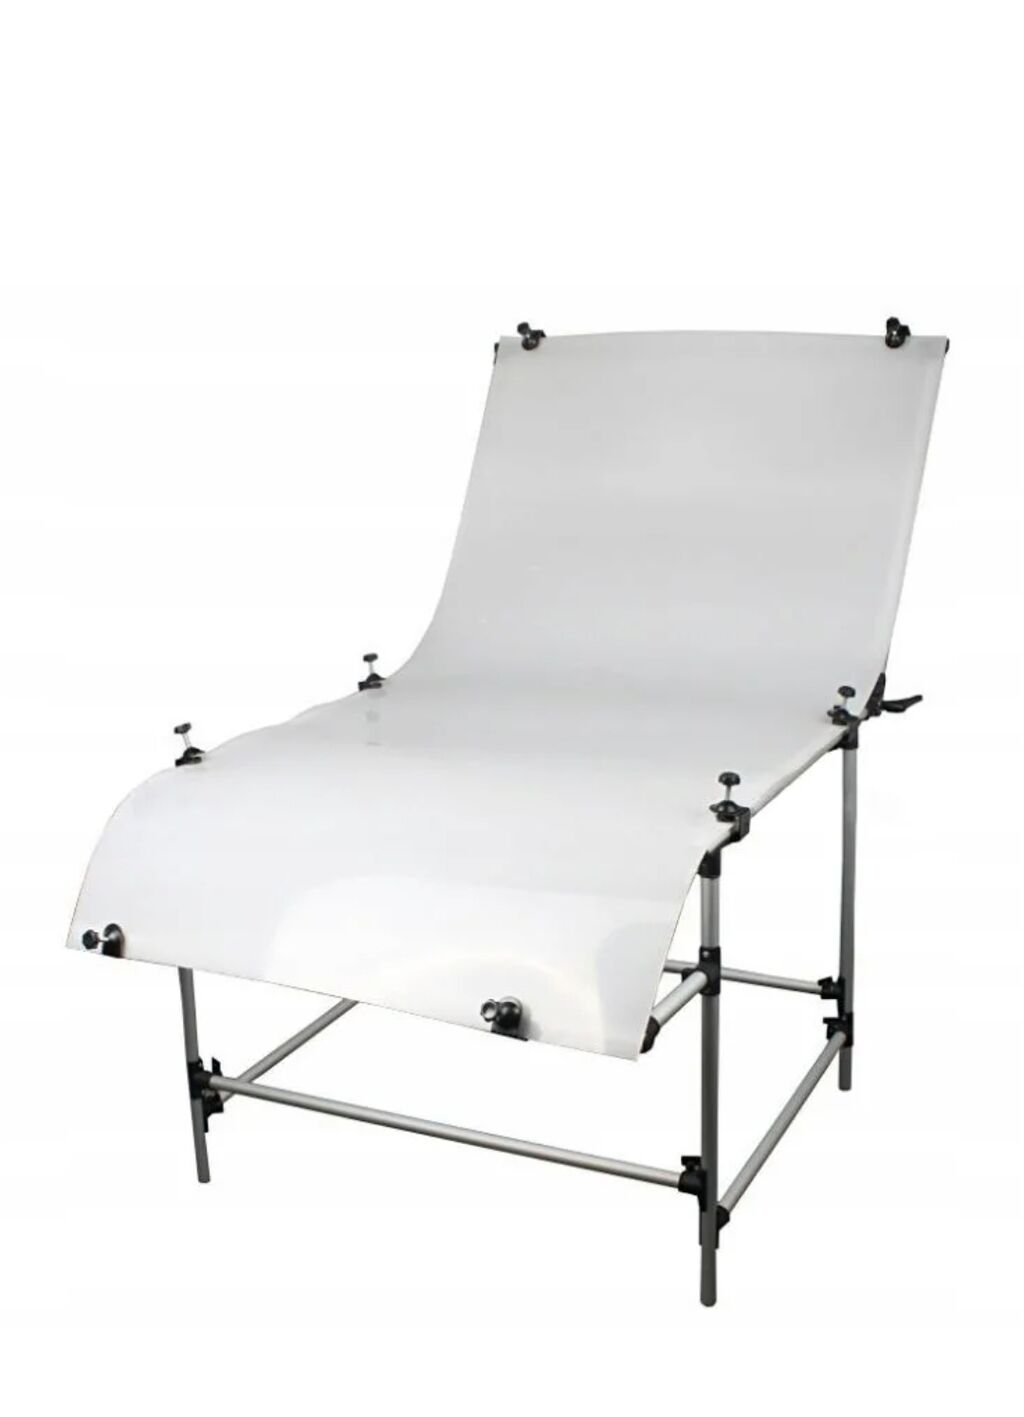 Стол для предметной съемки Jinbei 60x130 см.